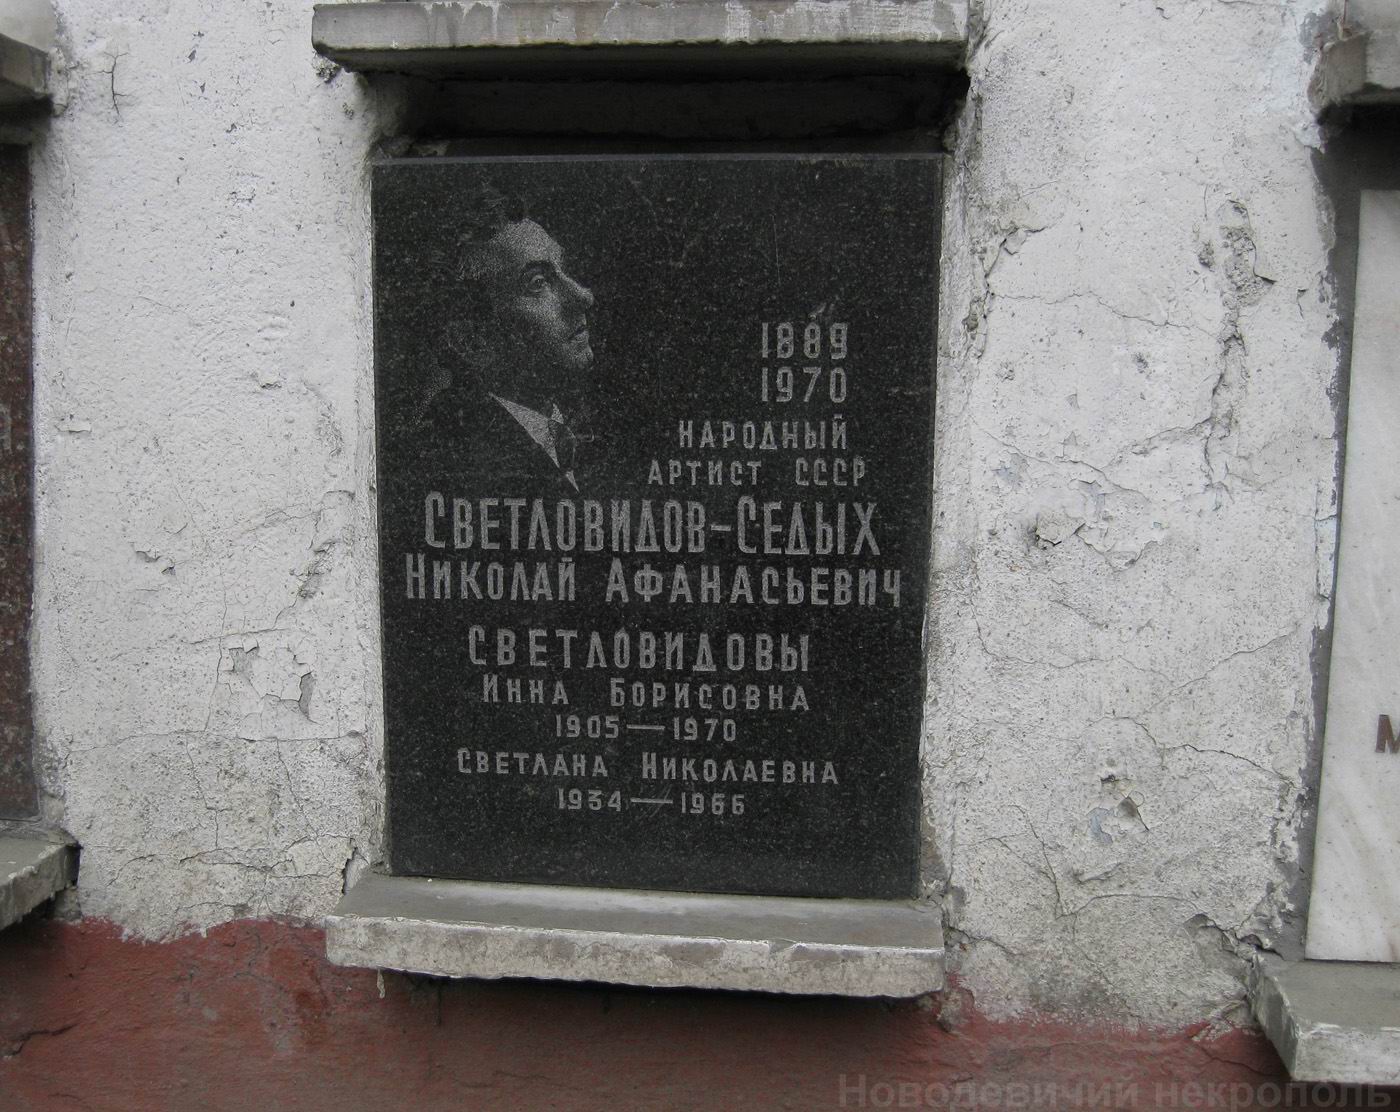 Плита на нише Светловидова-Седых Н.А. (1889-1970), на Новодевичьем кладбище (колумбарий [38]-3-4).